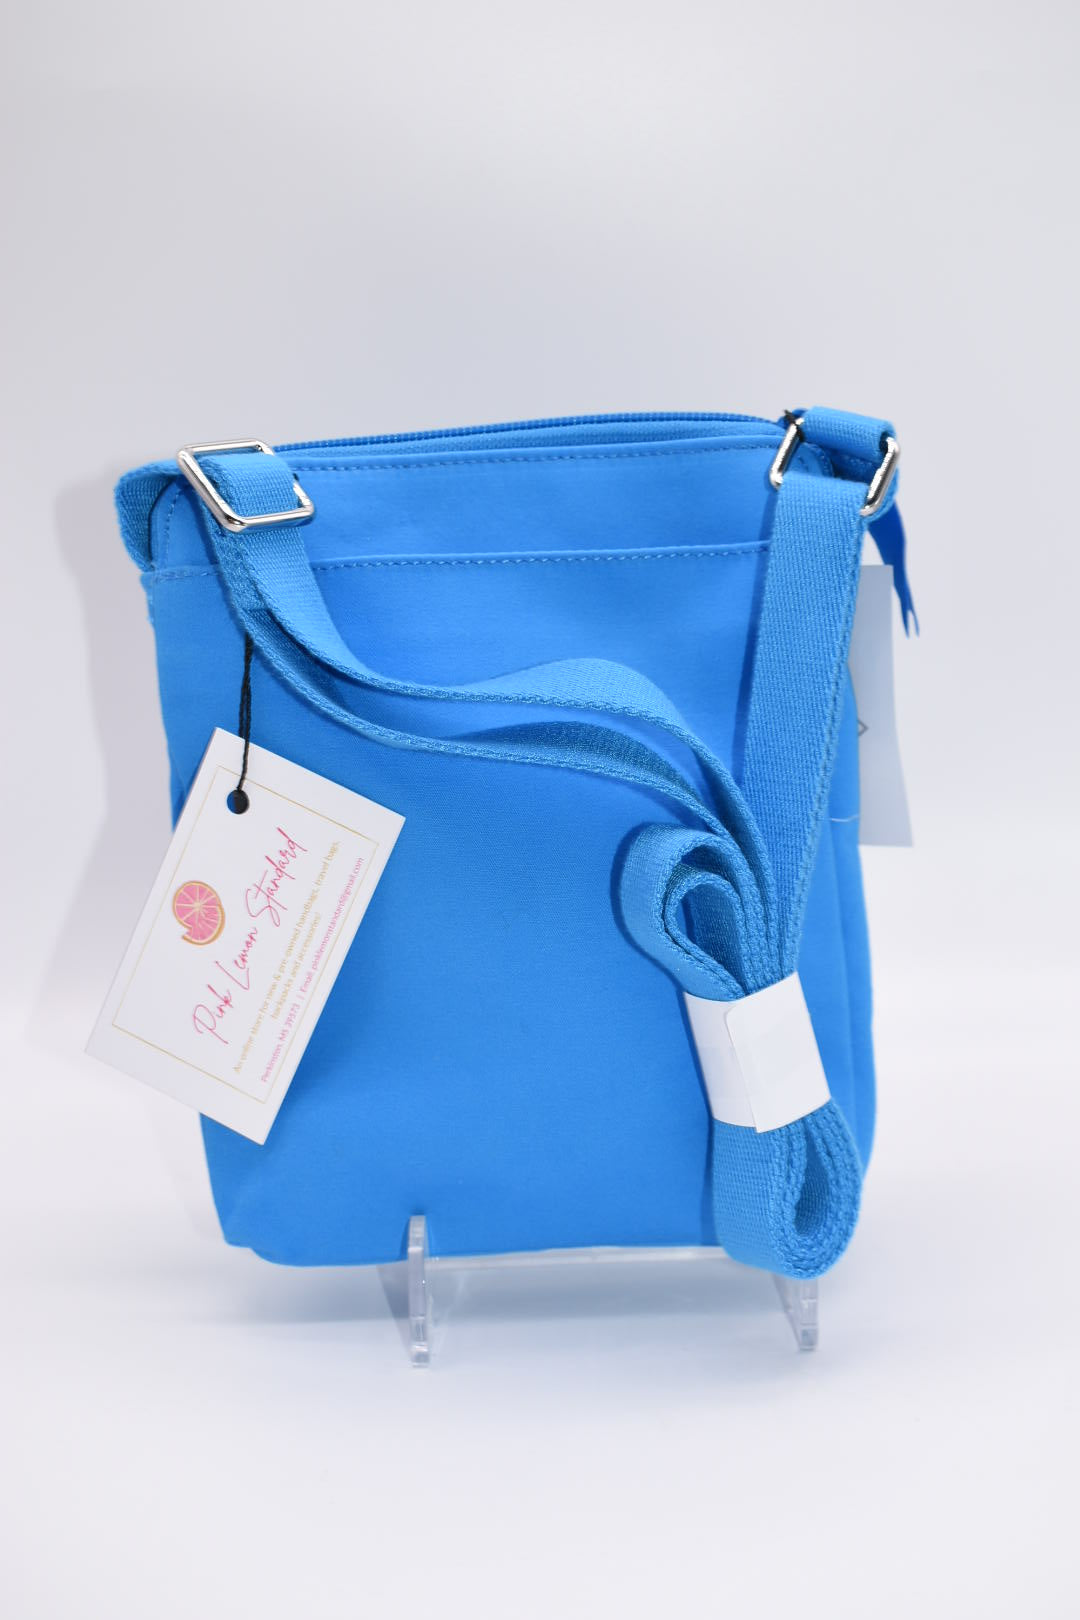 Vera Bradley RFID Mini Hipster Crossbody Bag in Blue Aster